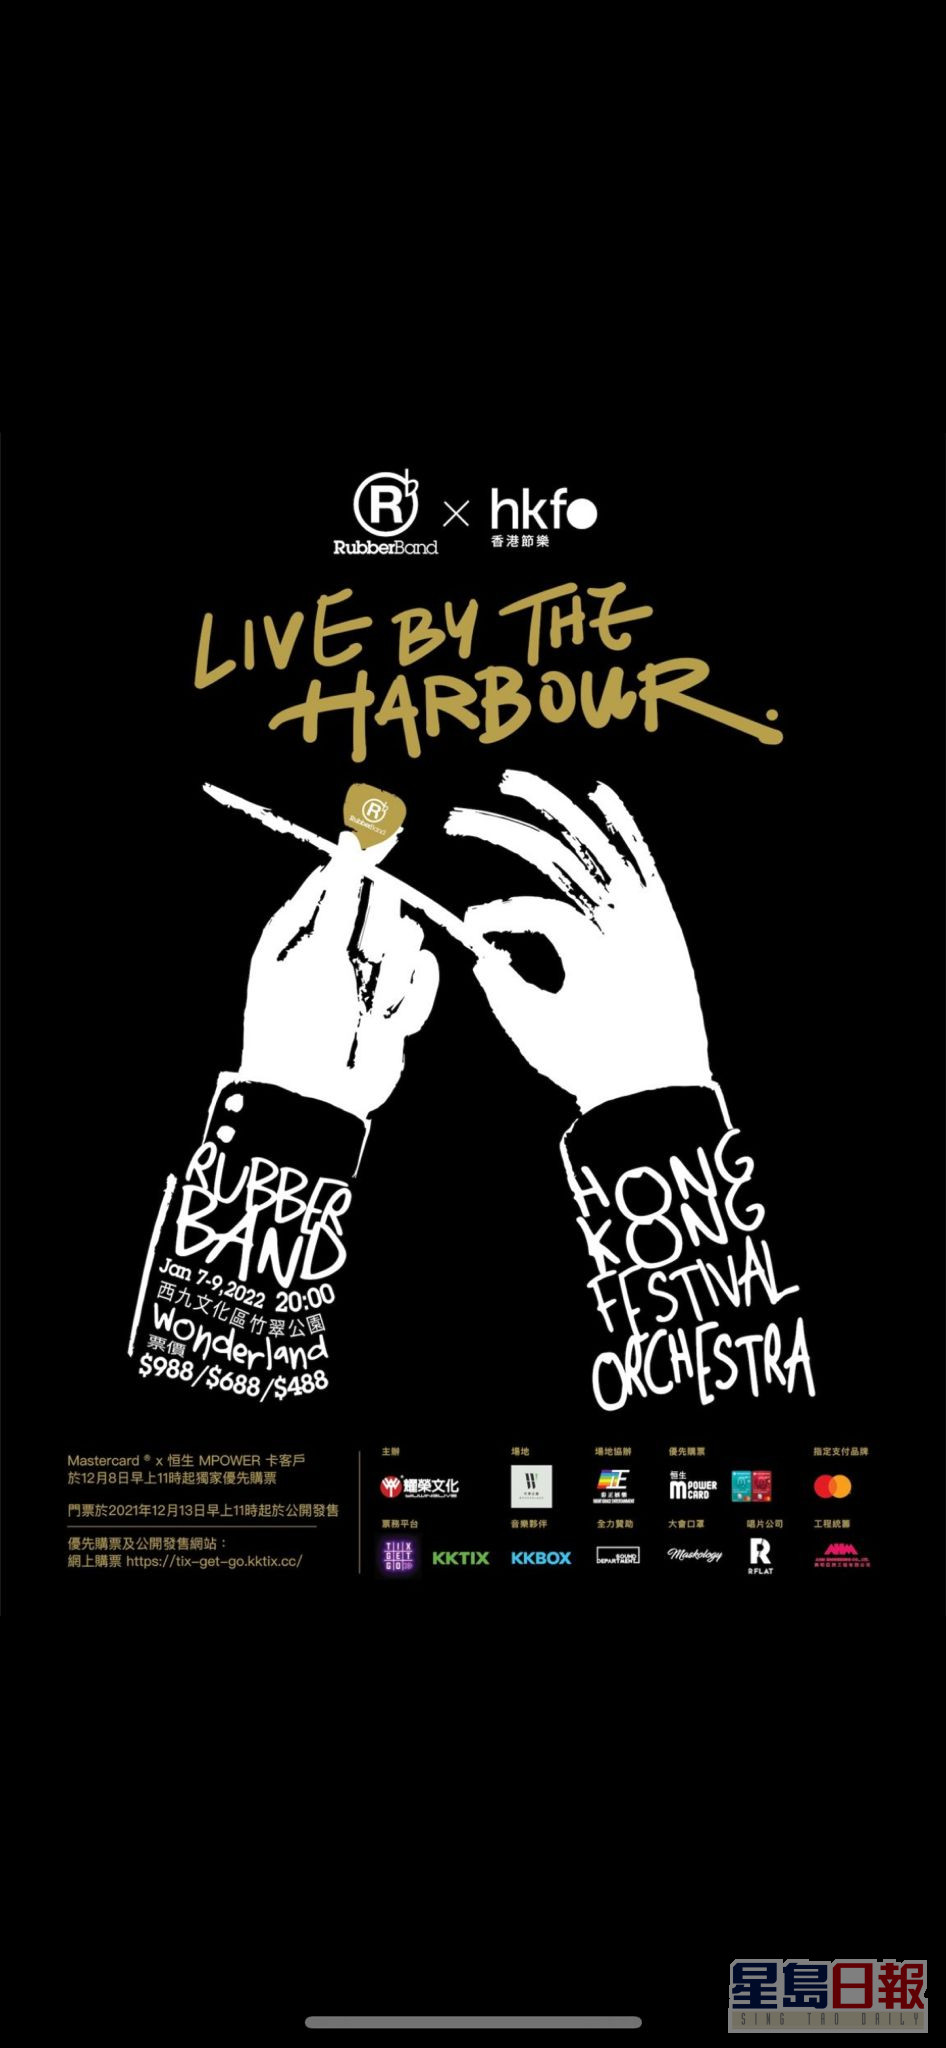 RubberBand x 香港节庆管弦乐团 「Liveby the Harbour」• 音乐会将会延期。